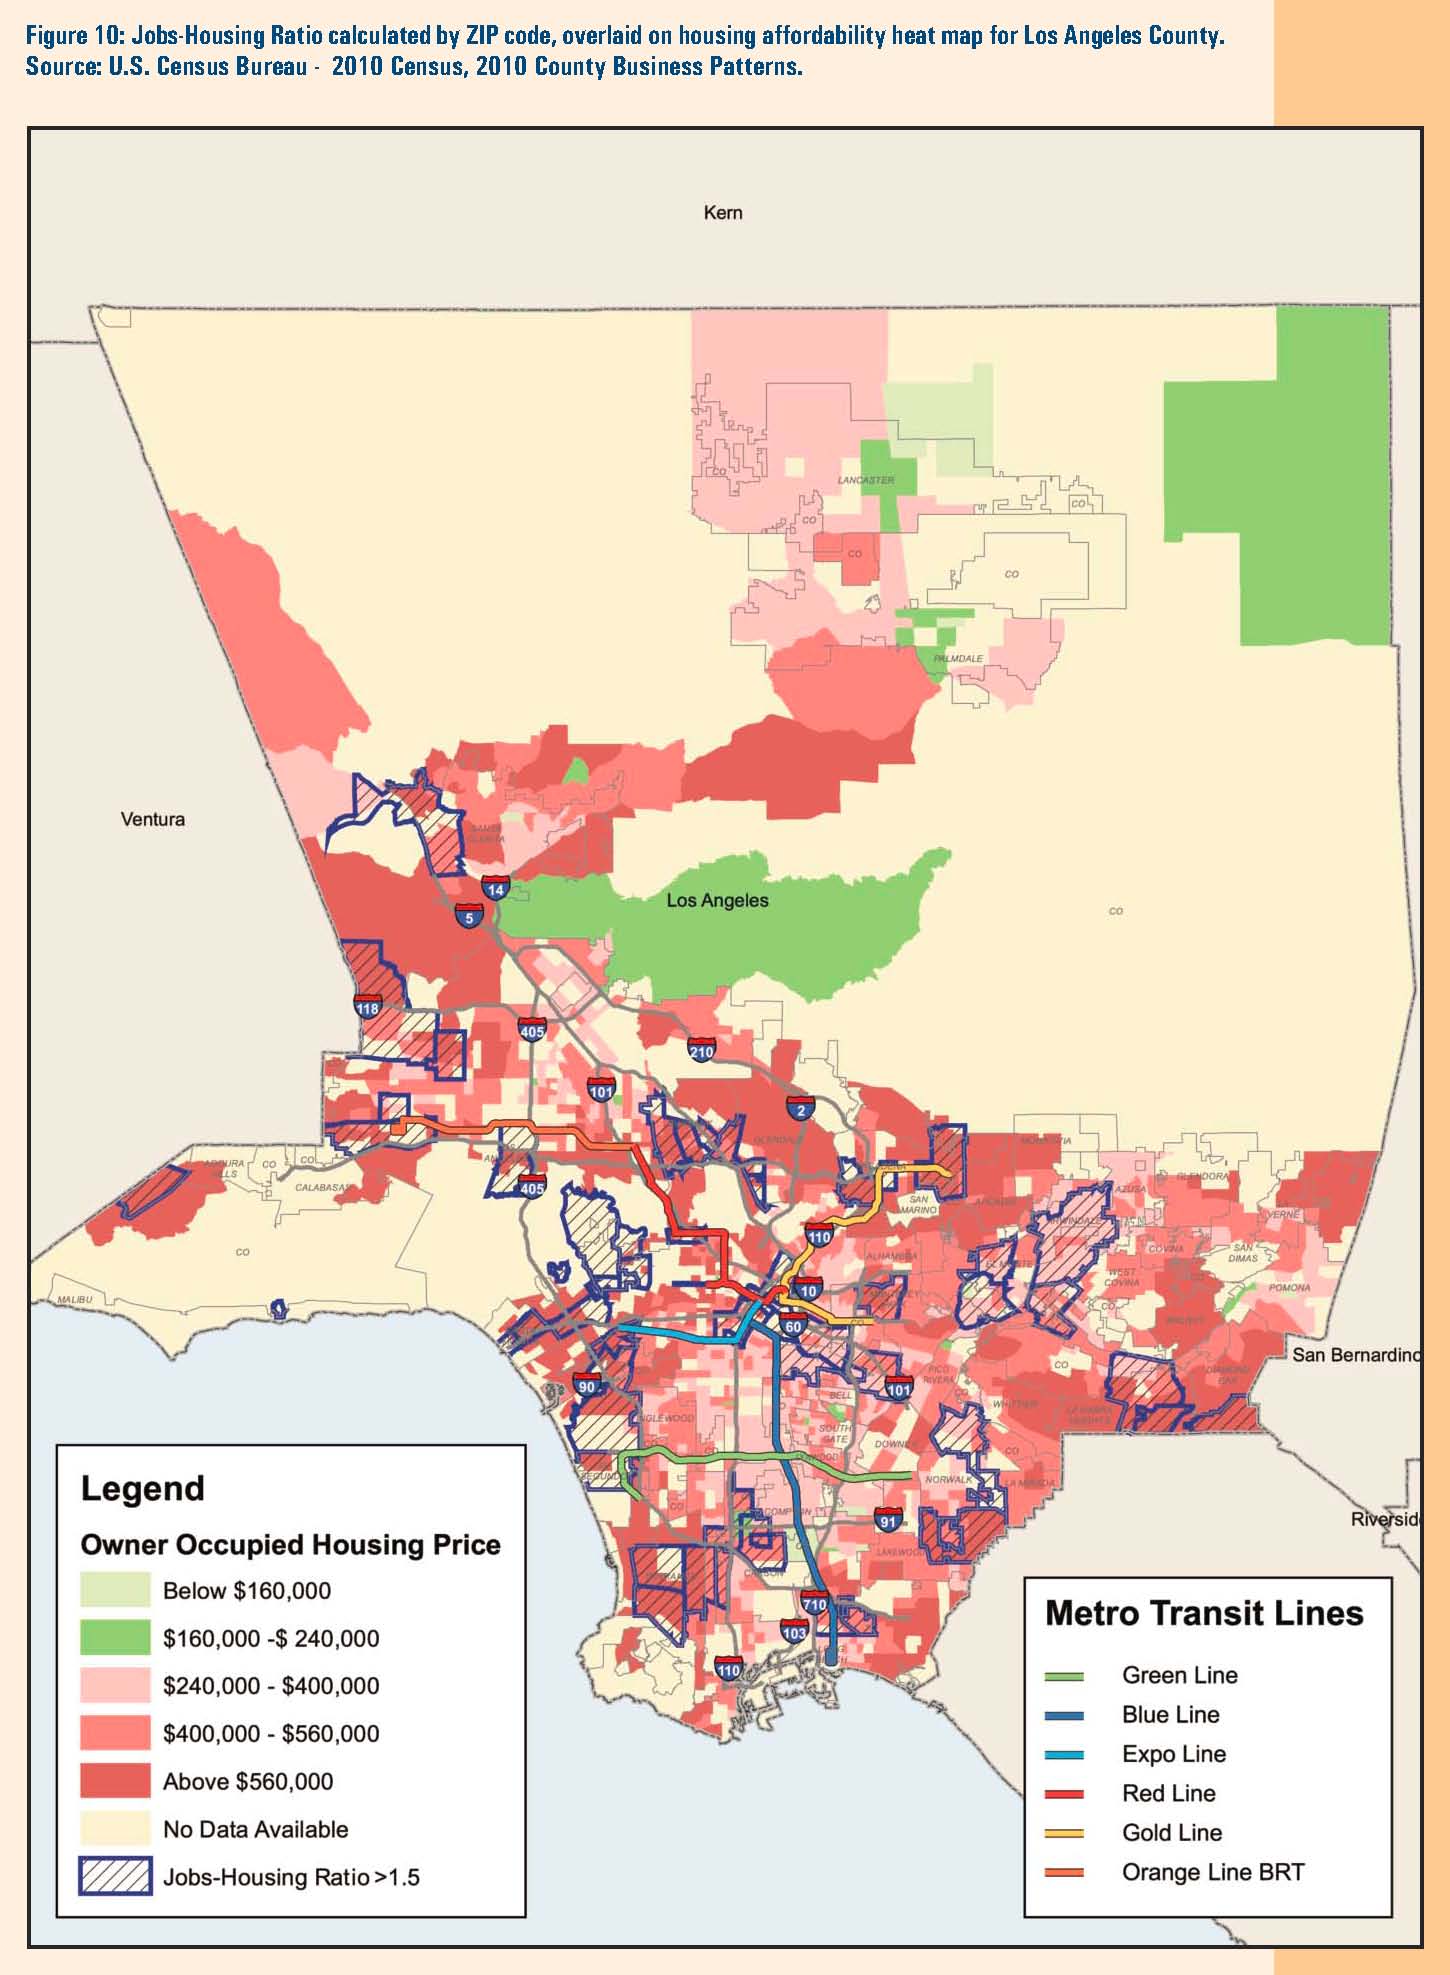 Job-Housing Ratio Overlaid on Housing Affordability Heat Map